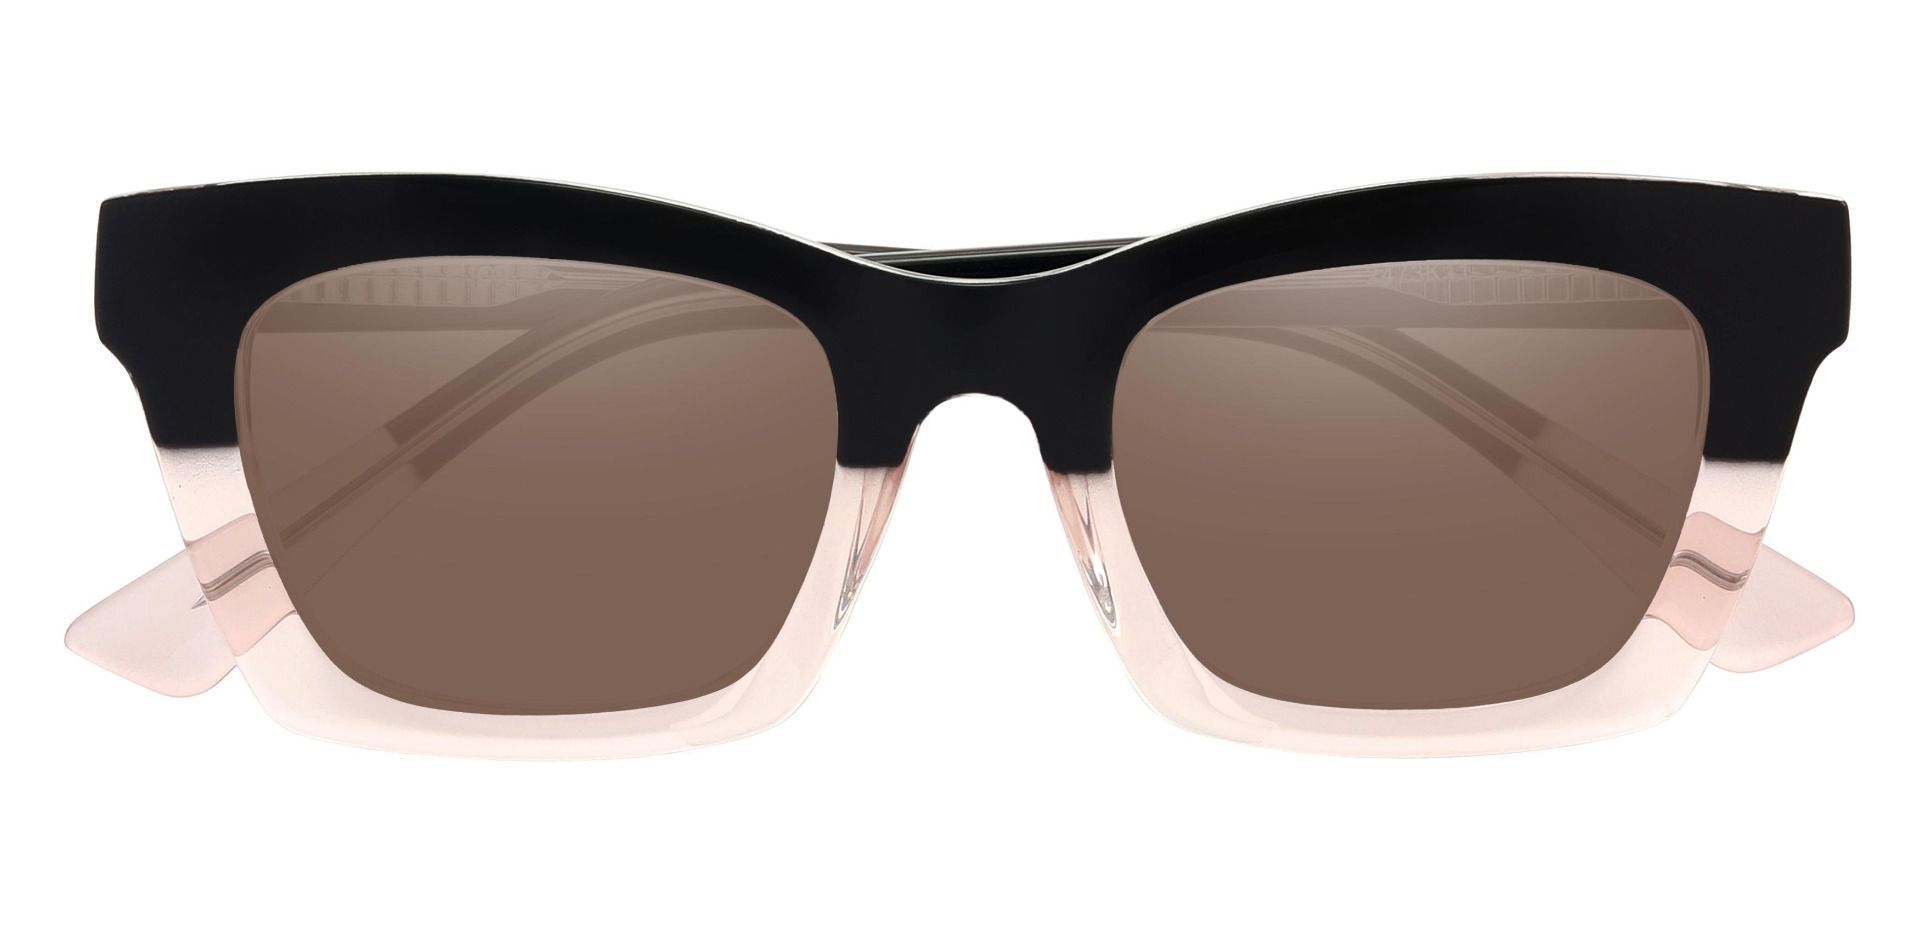 McKee Rectangle Prescription Sunglasses - Black Frame With Brown Lenses